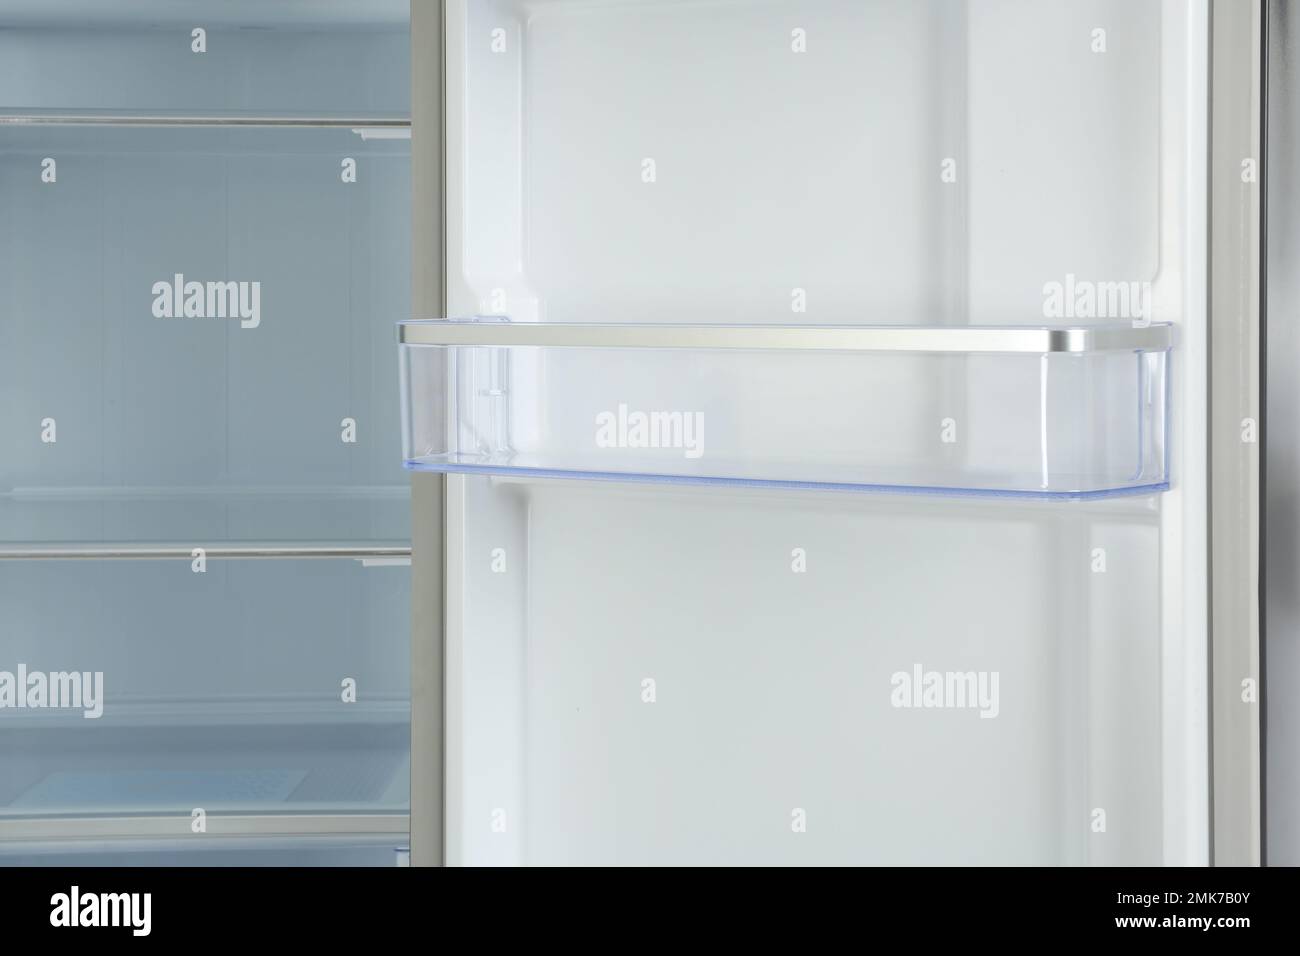 Door shelf of empty modern refrigerator, closeup view Stock Photo